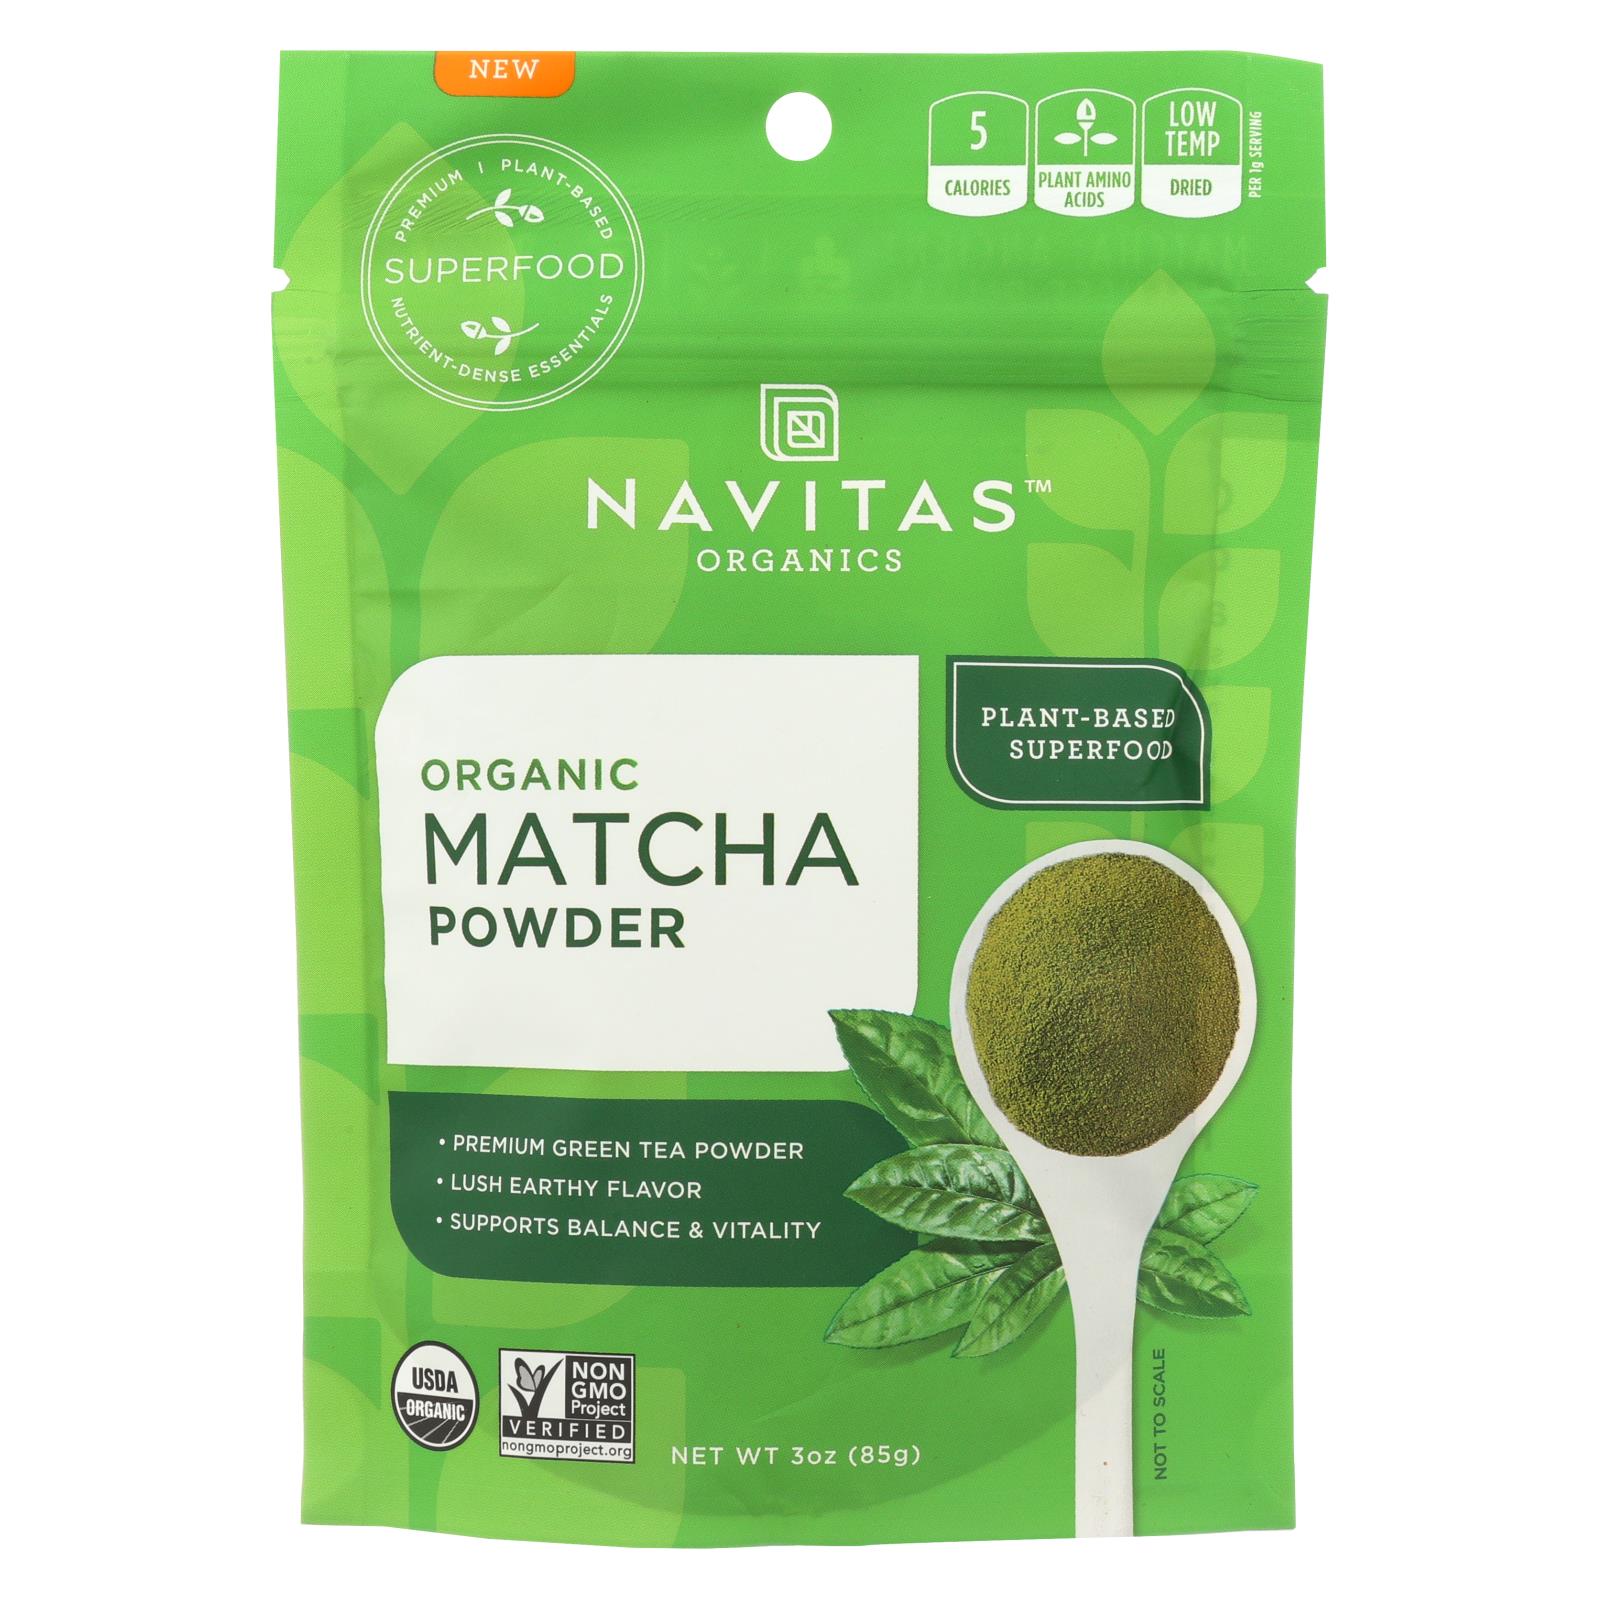 Navitas Organics Organic Matcha Powder - 6개 묶음상품 - 3 OZ